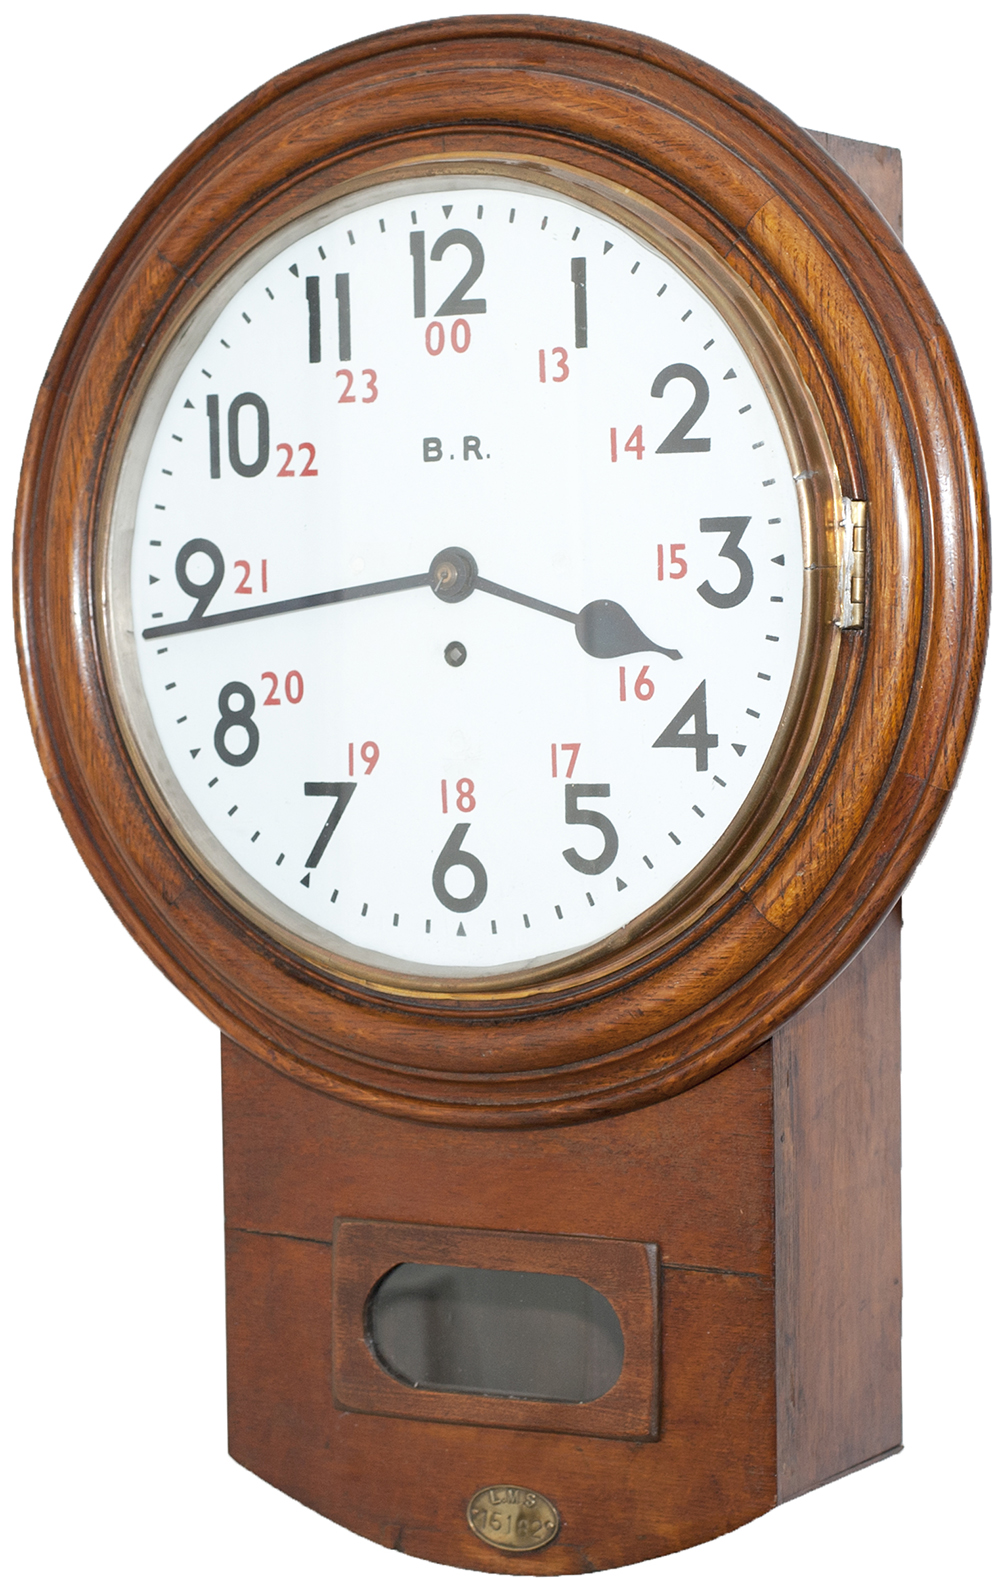 Midland Railway 12 inch oak cased English fusee railway drop dial clock supplied by John Smiths or